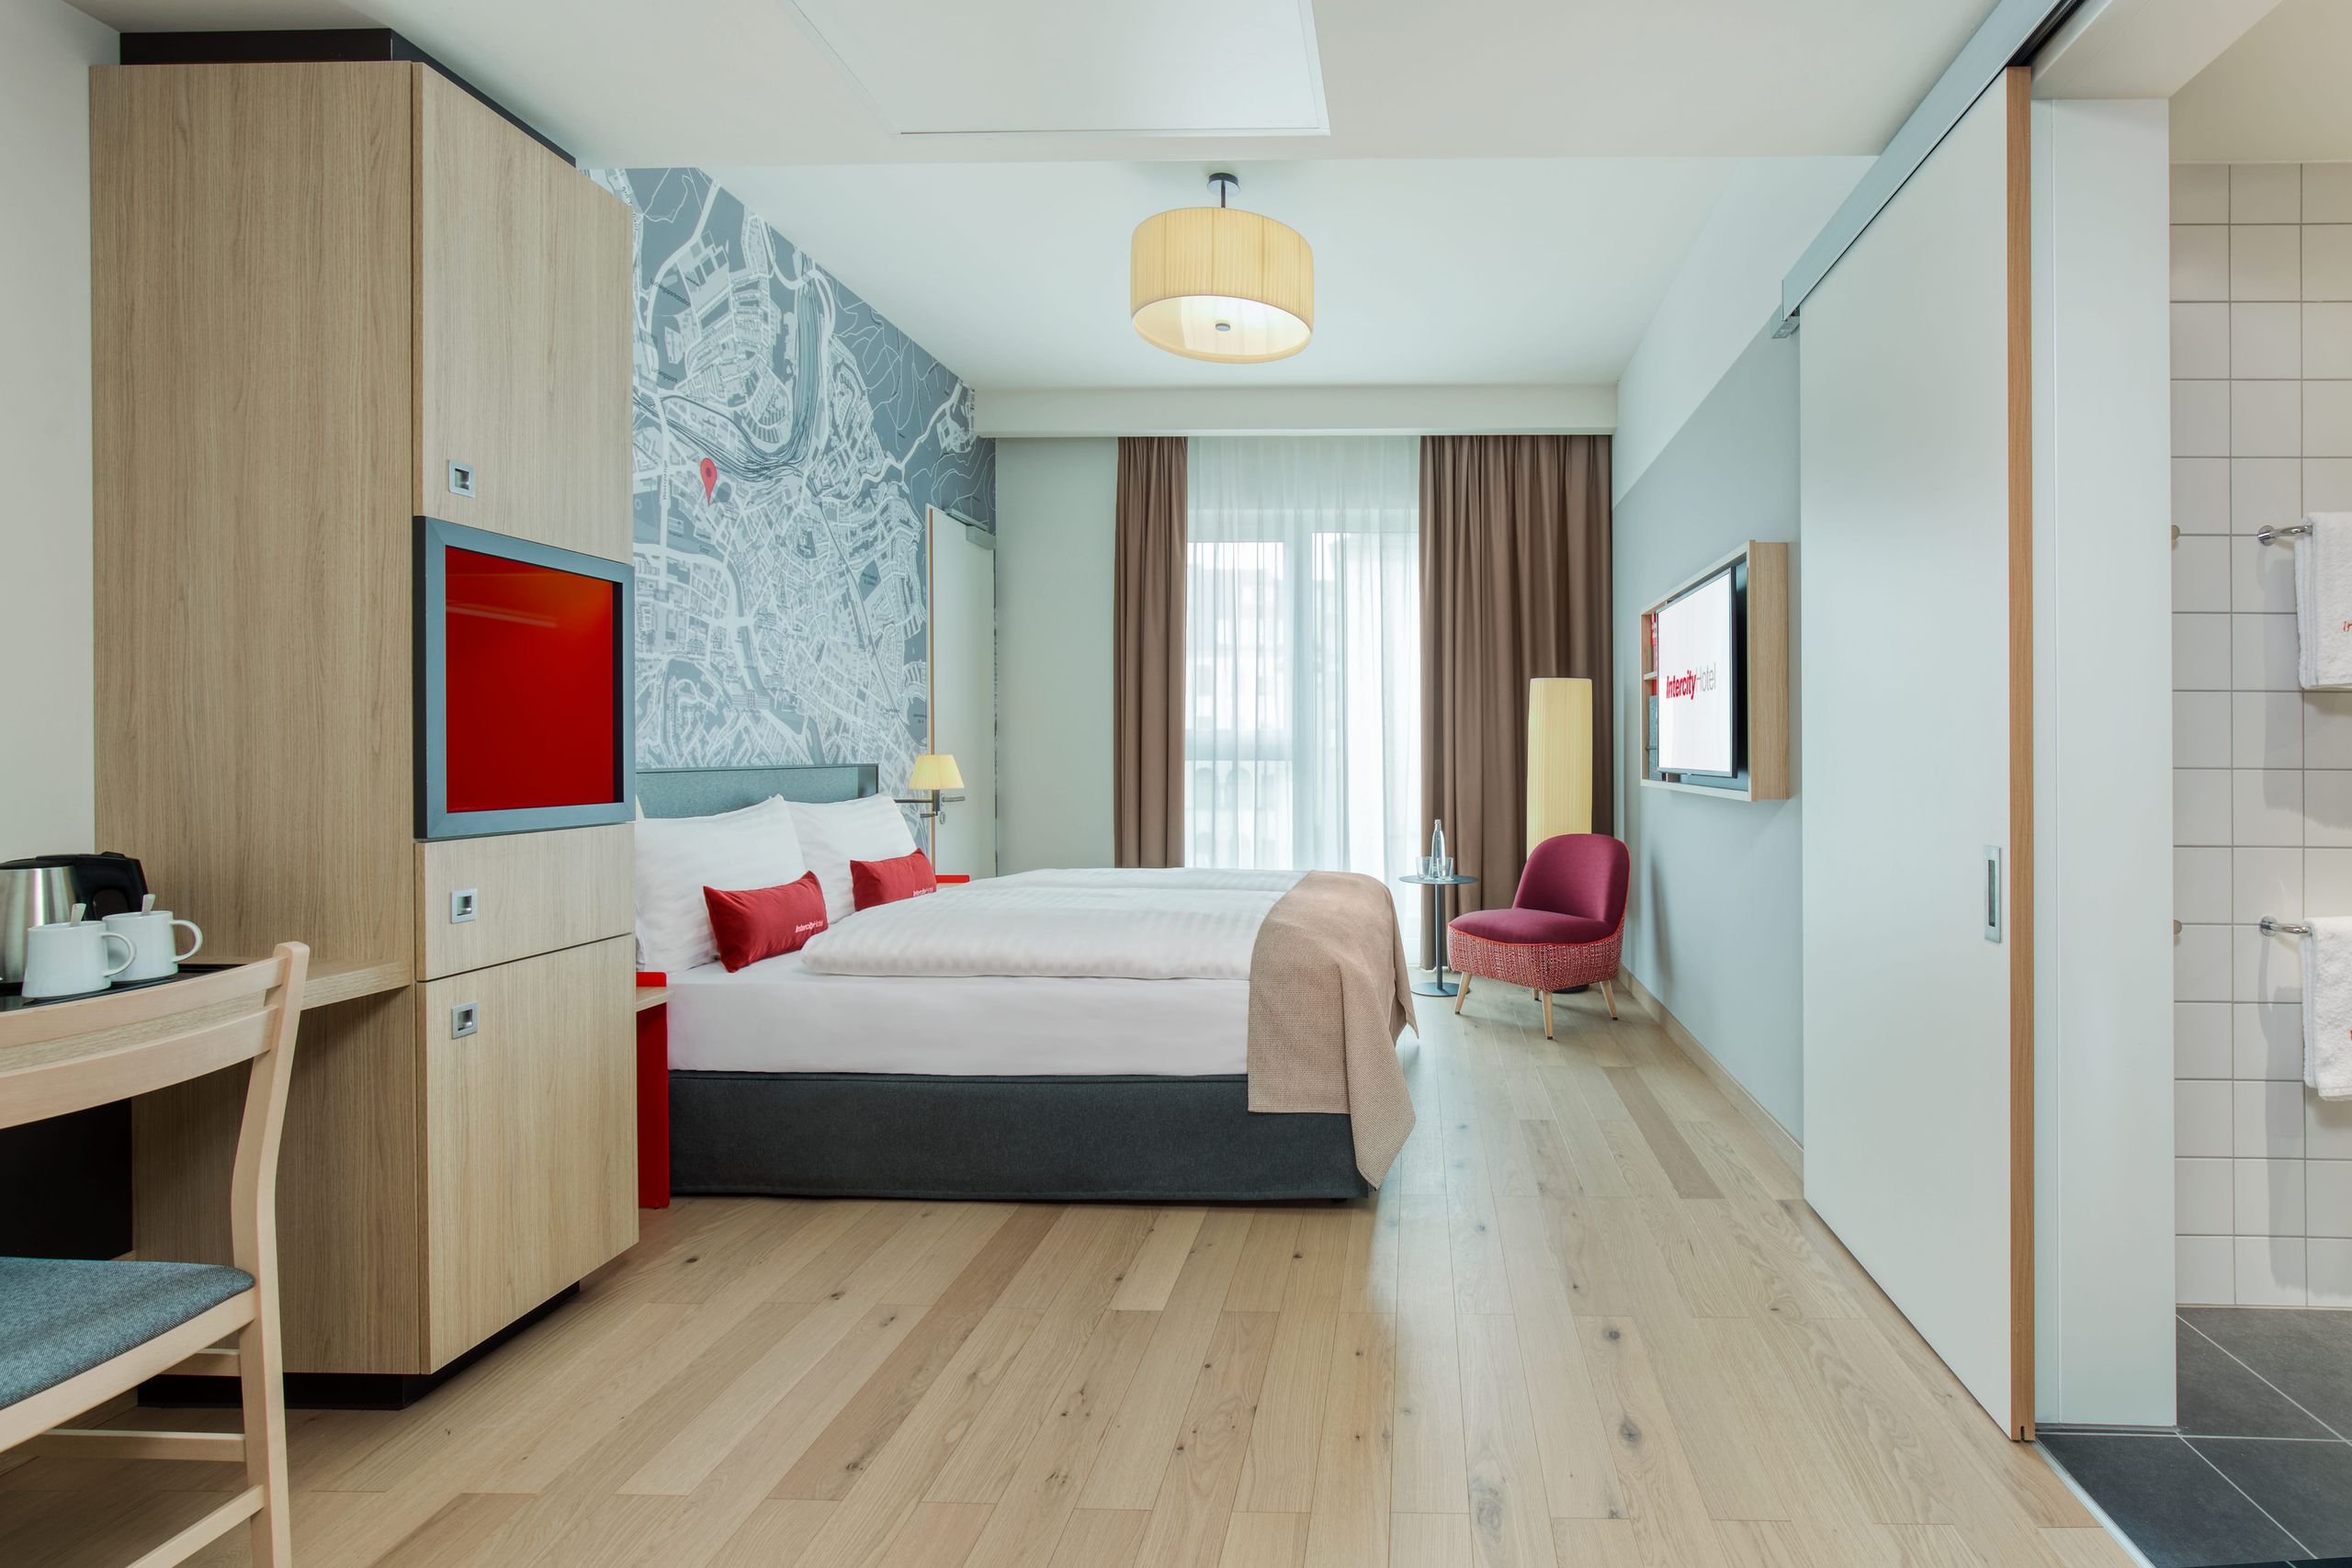 Hôtel à Sarrebruck | IntercityHotel Sarrebruck - Chambre adaptée aux personnes handicapées